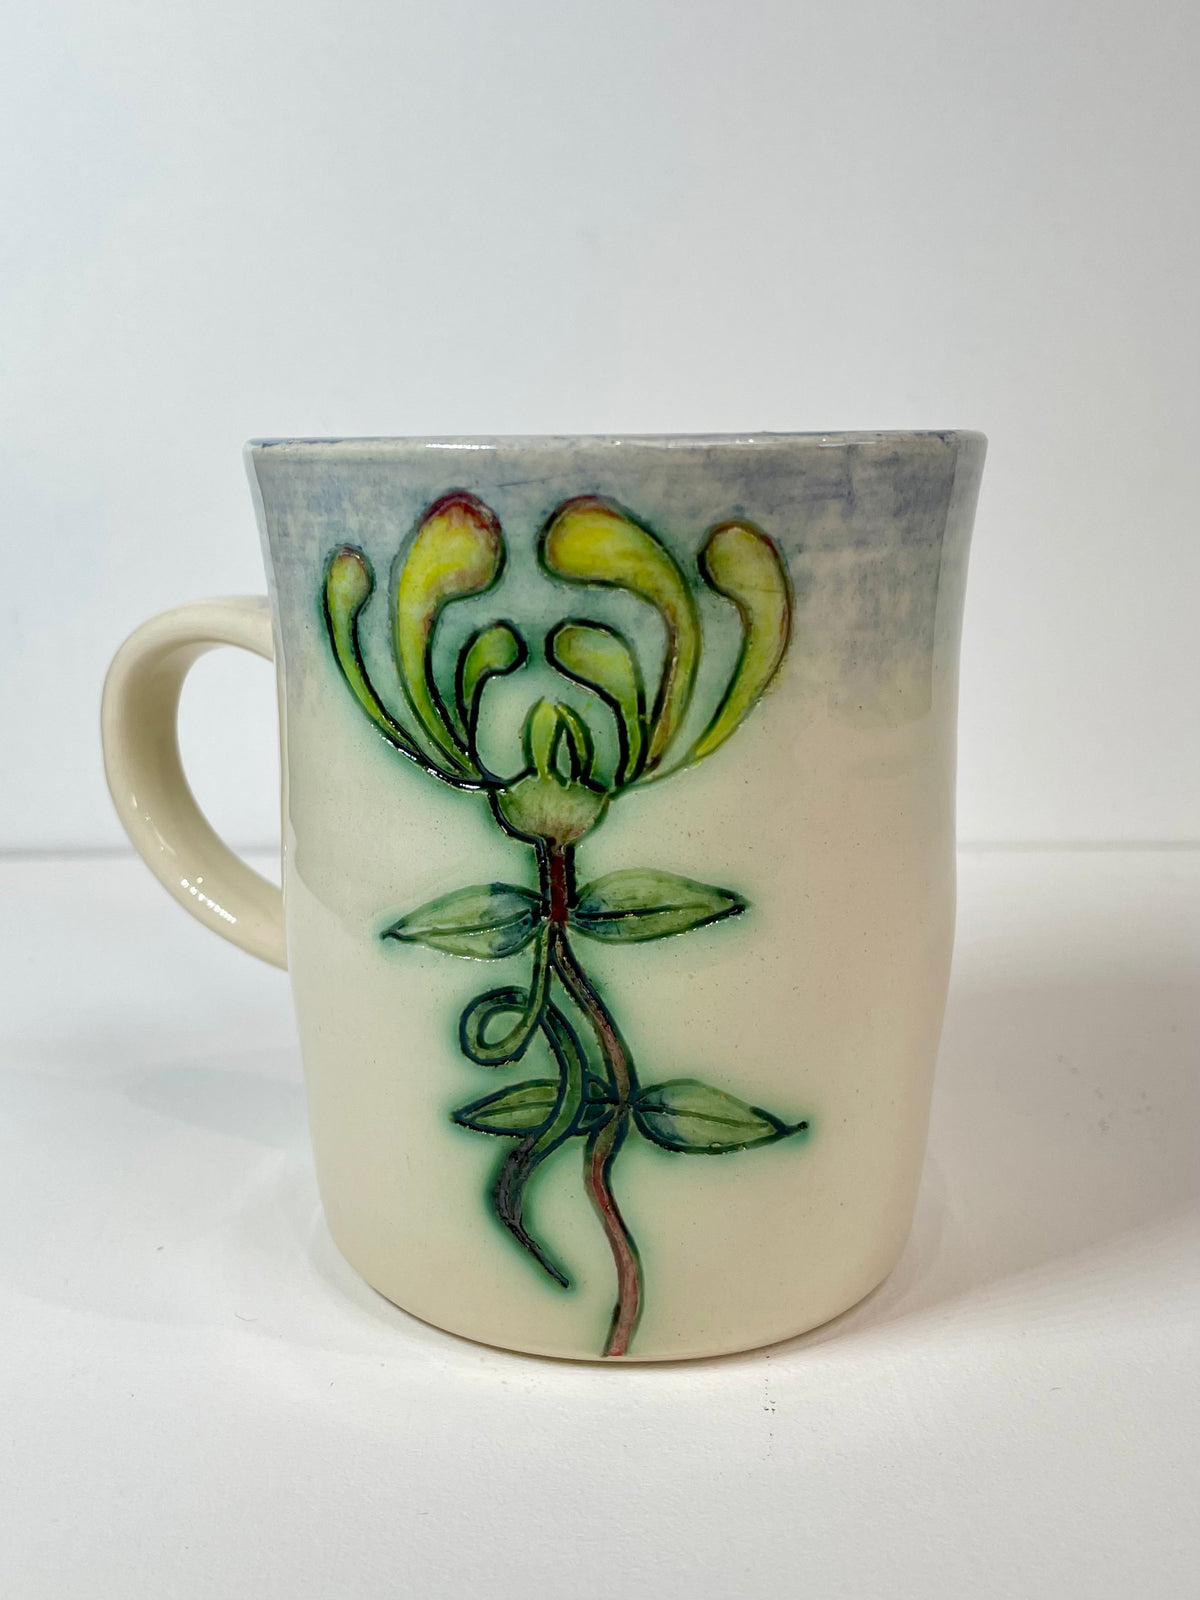 Bee and honeysuckle mug by Jeanne Jackson